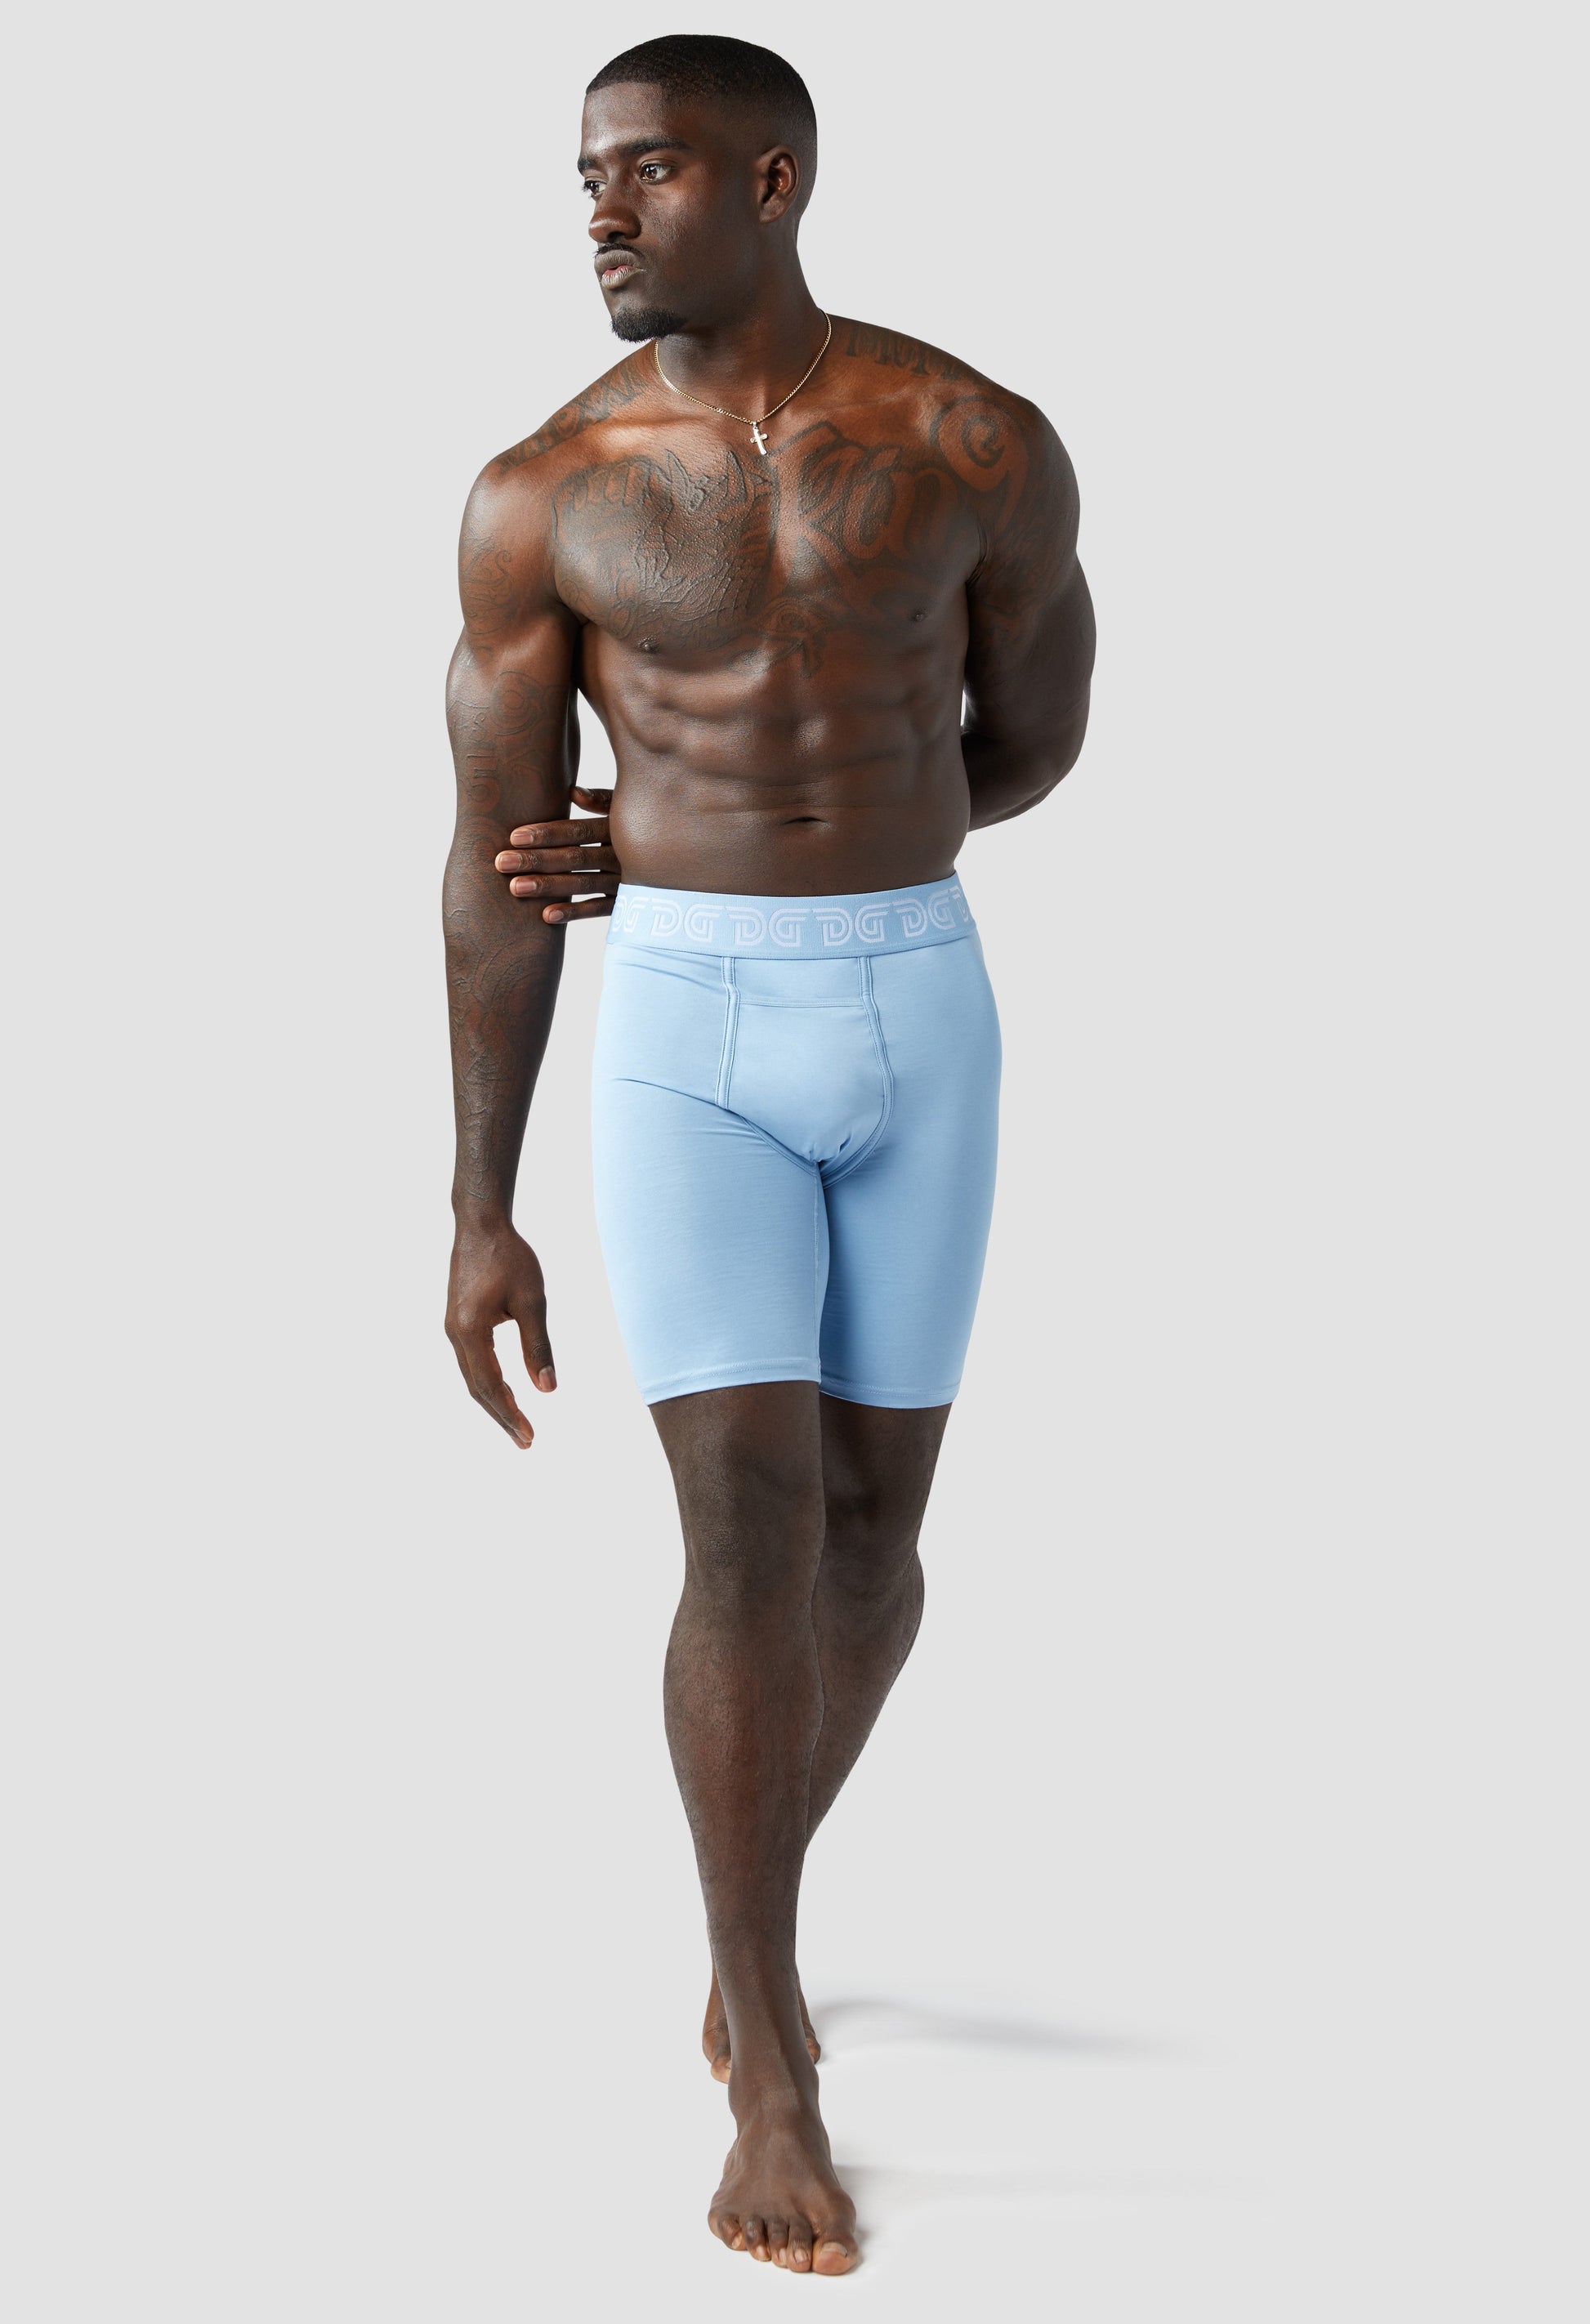 Dollar Bigboss Men's Innerwear upto 60% off 